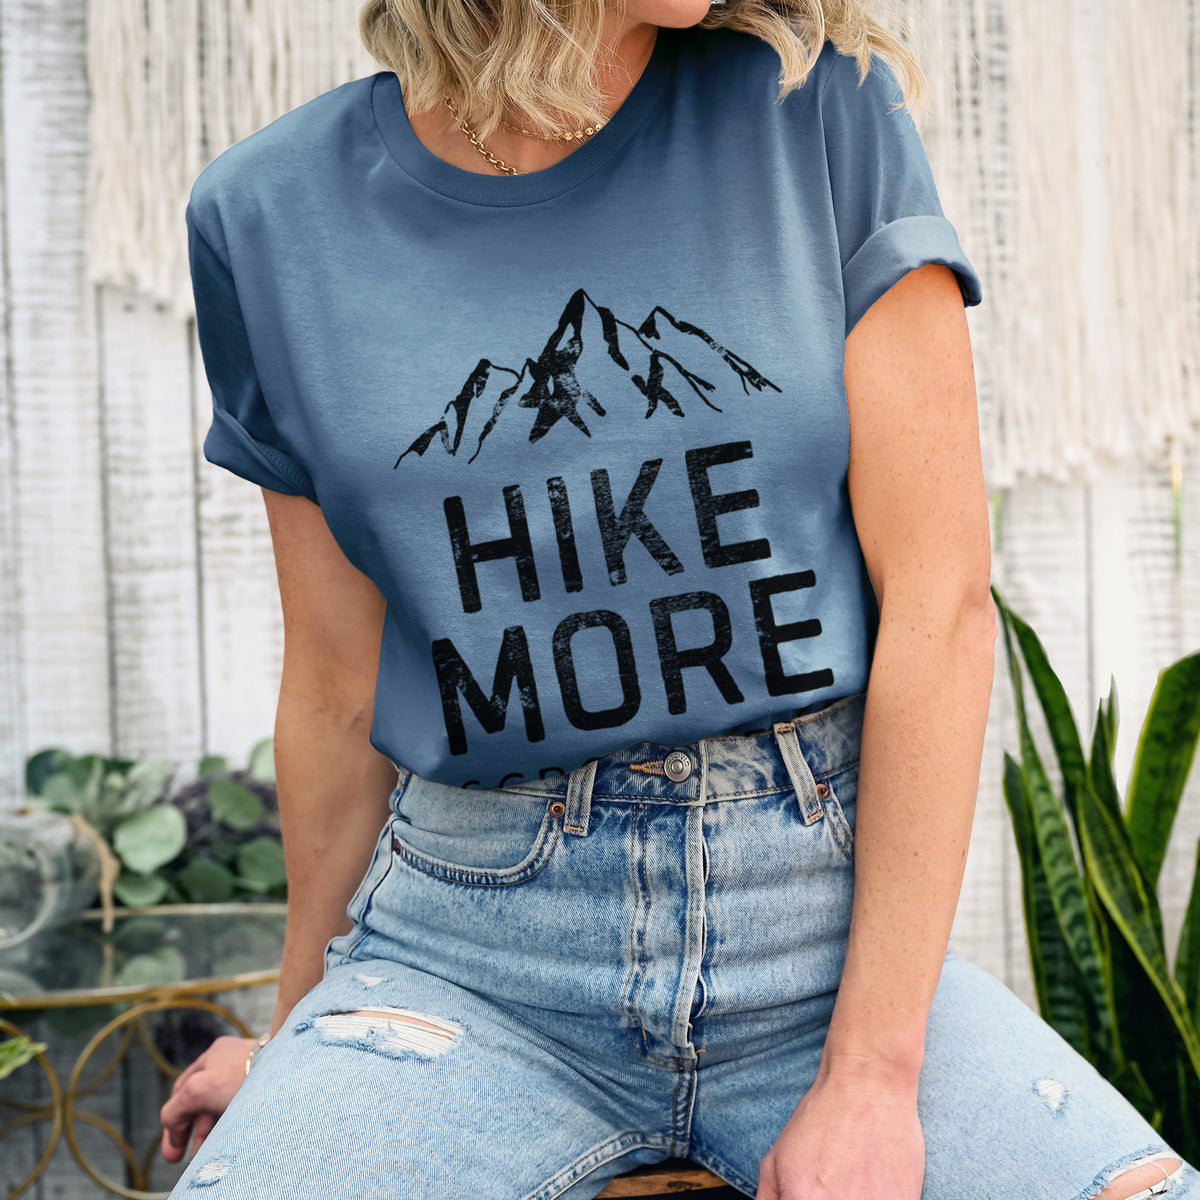 Hike More - Scroll Less - Lightweight 100% Cotton Unisex Crewneck